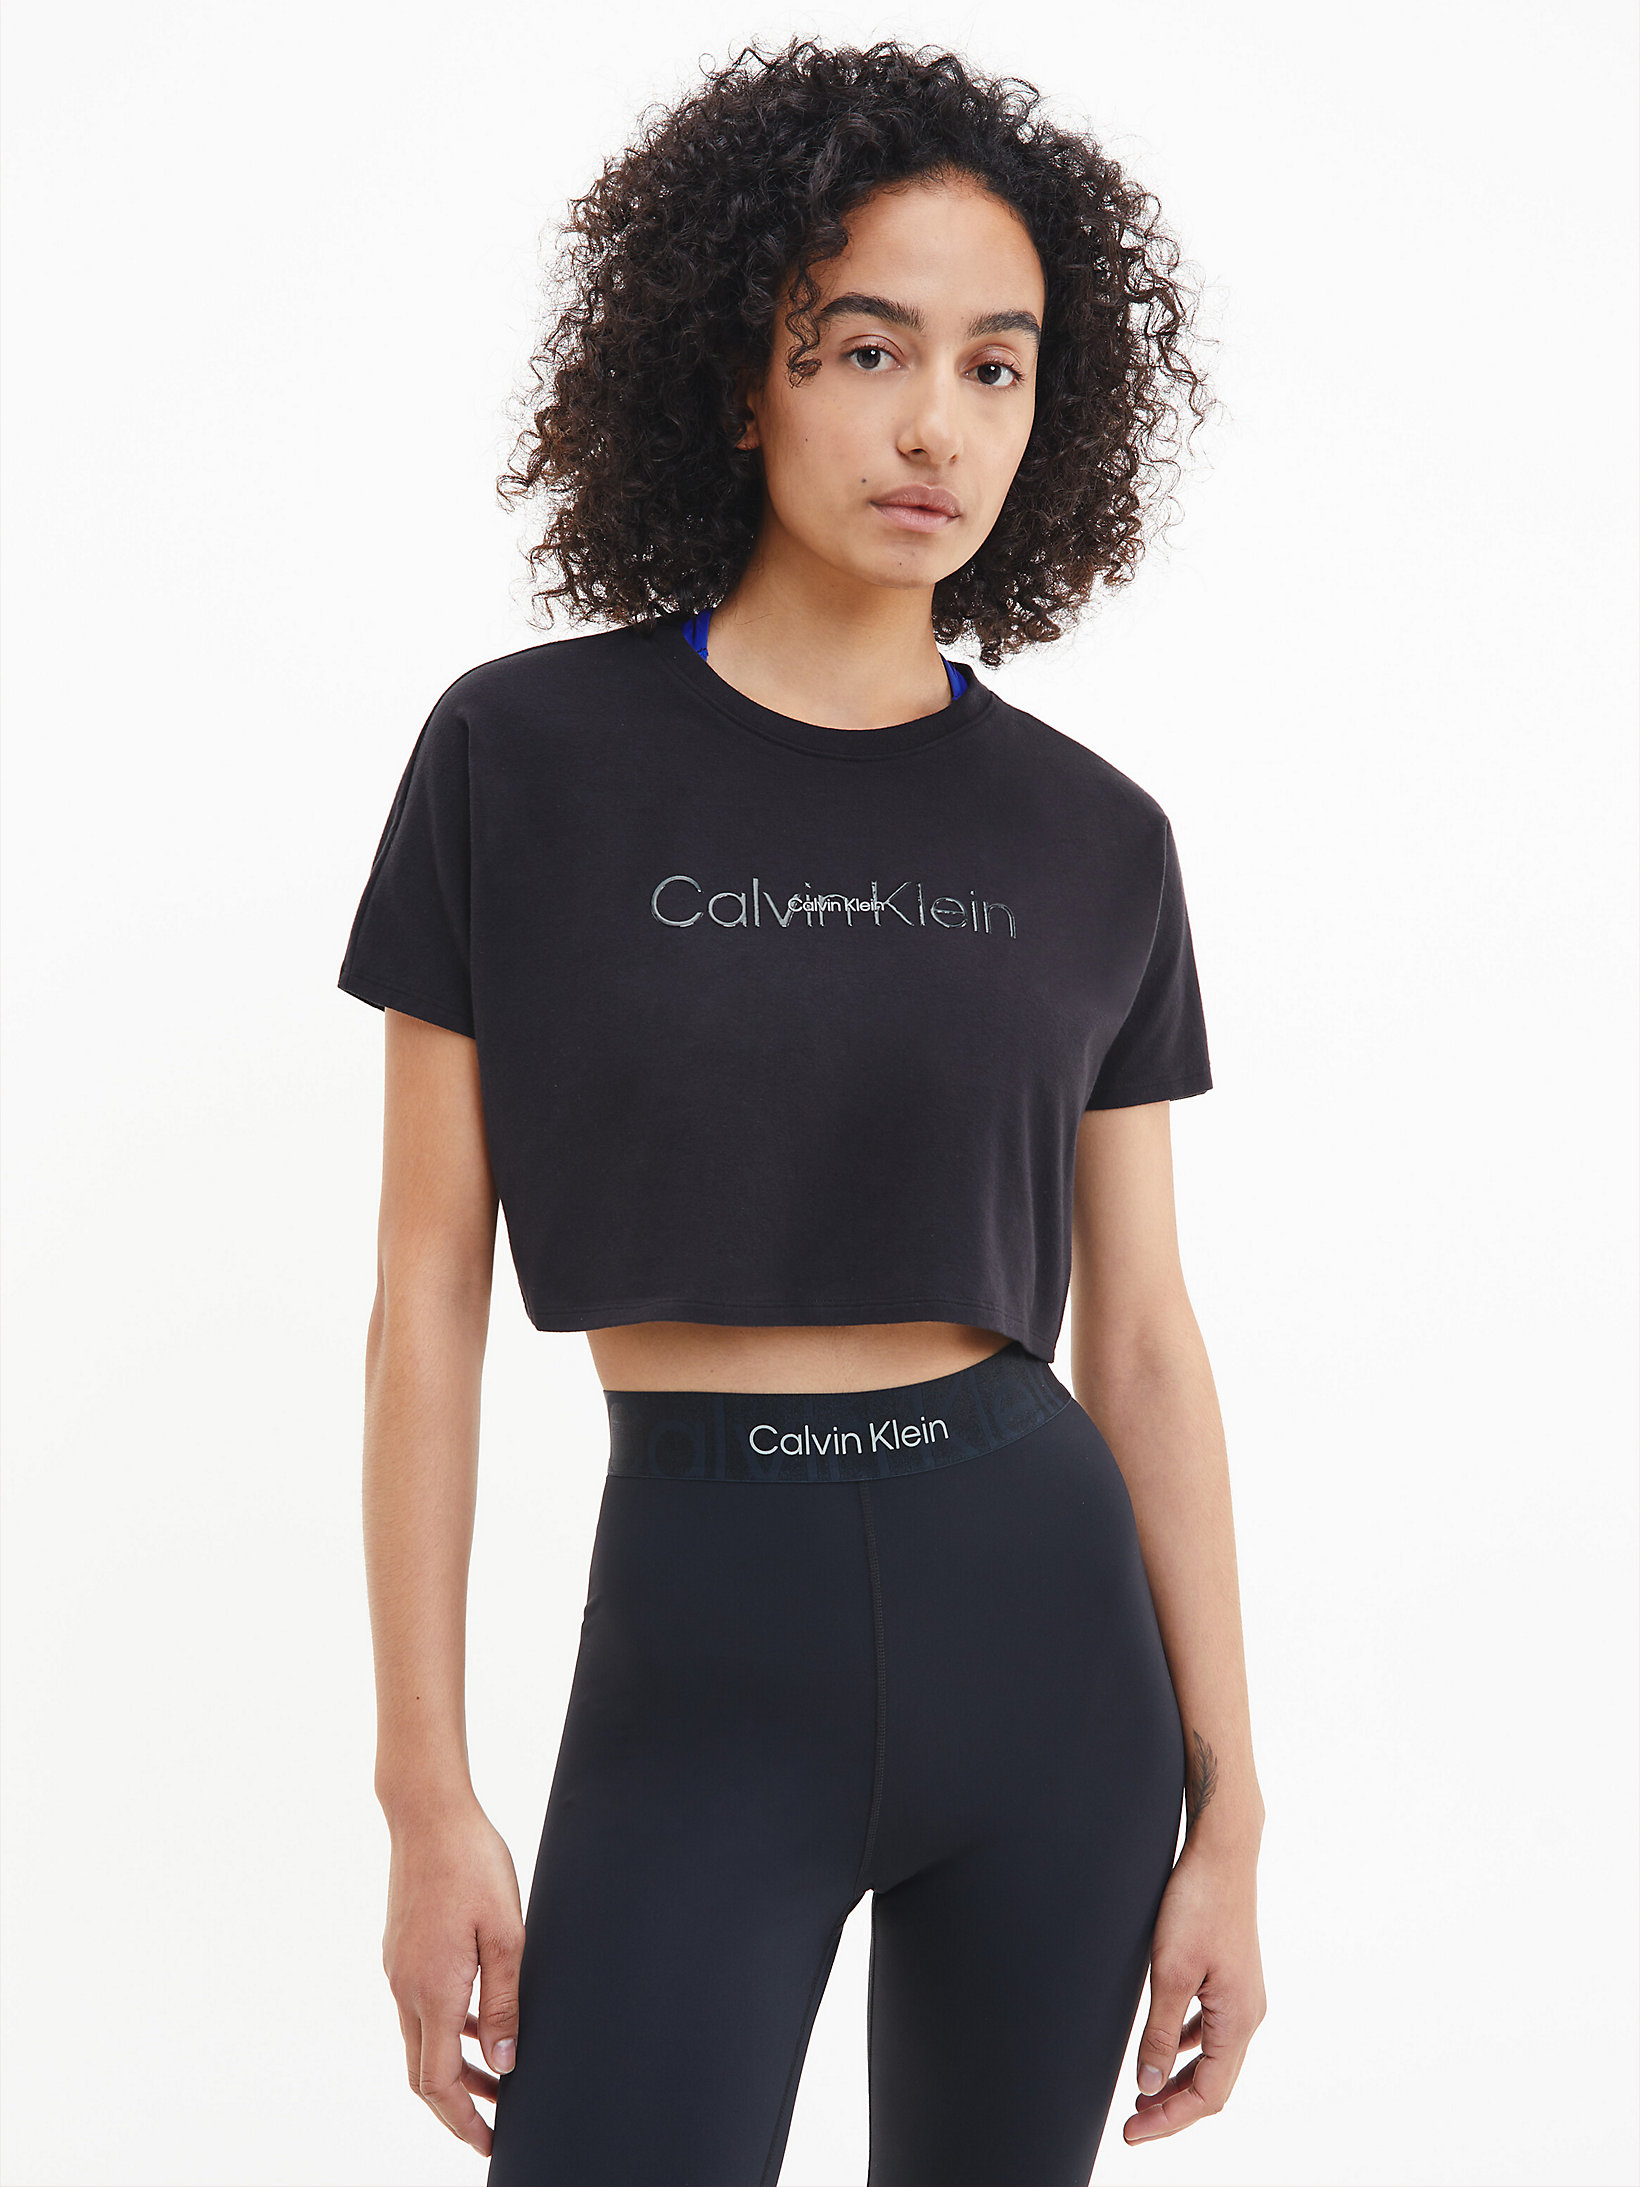 Black Beauty > Укороченная спортивная футболка > undefined Женщины - Calvin Klein